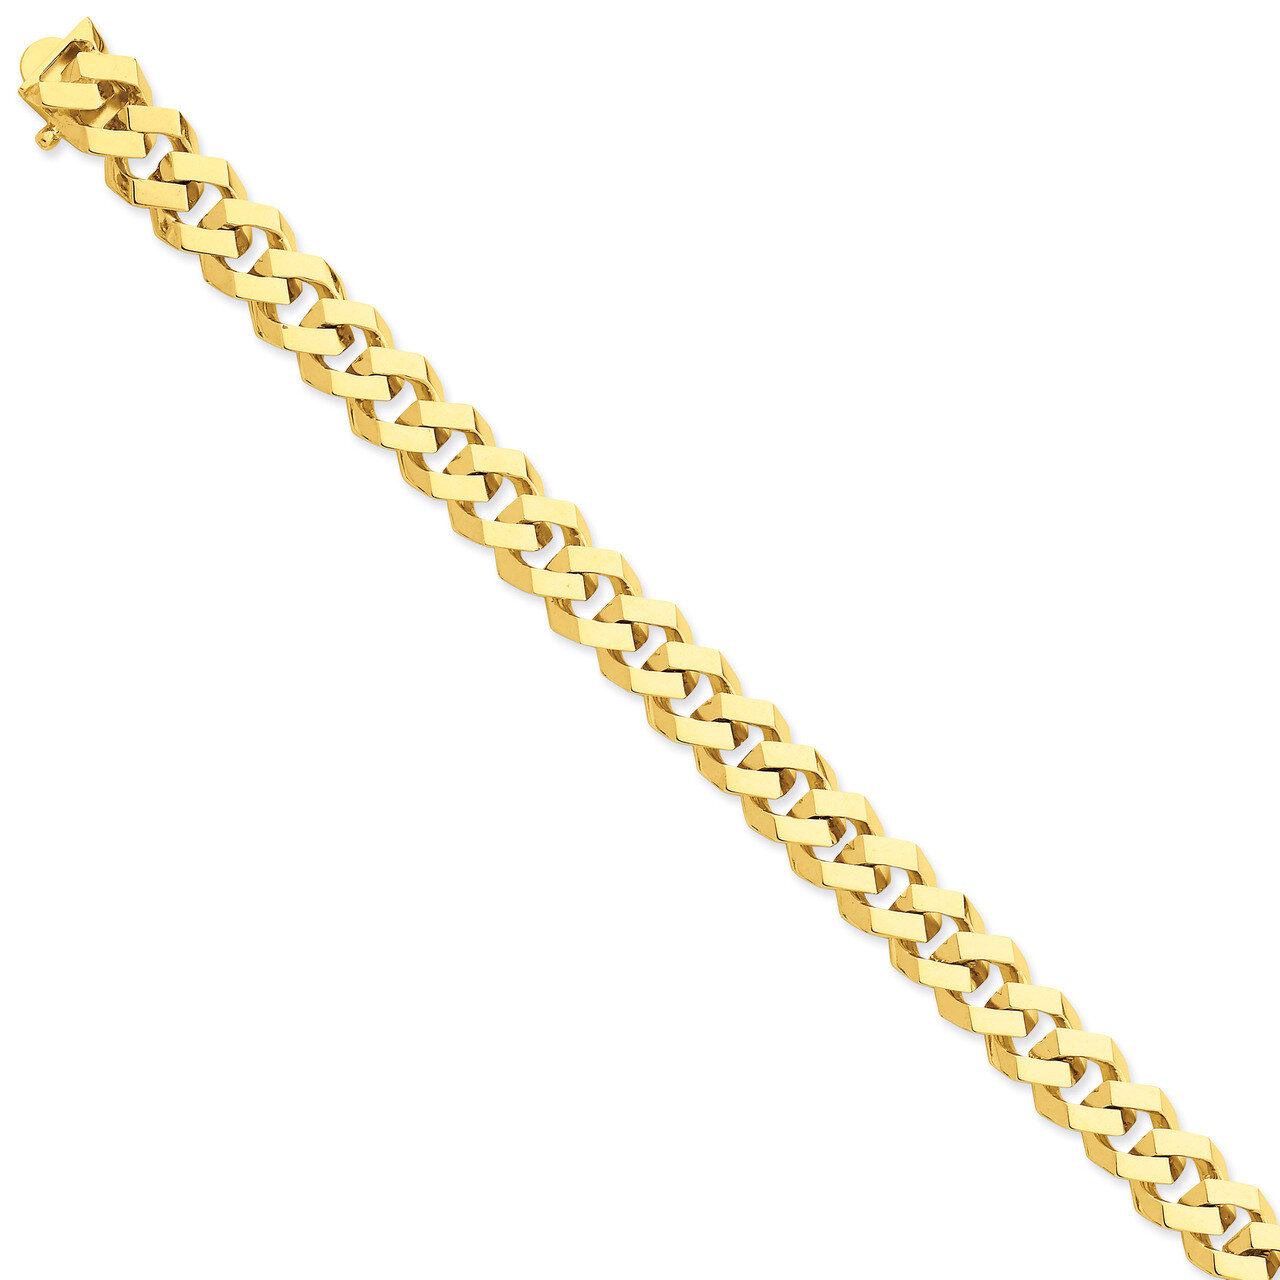 10mm Hand-polished Fancy Link Chain 9 Inch 14k Gold LK158-9